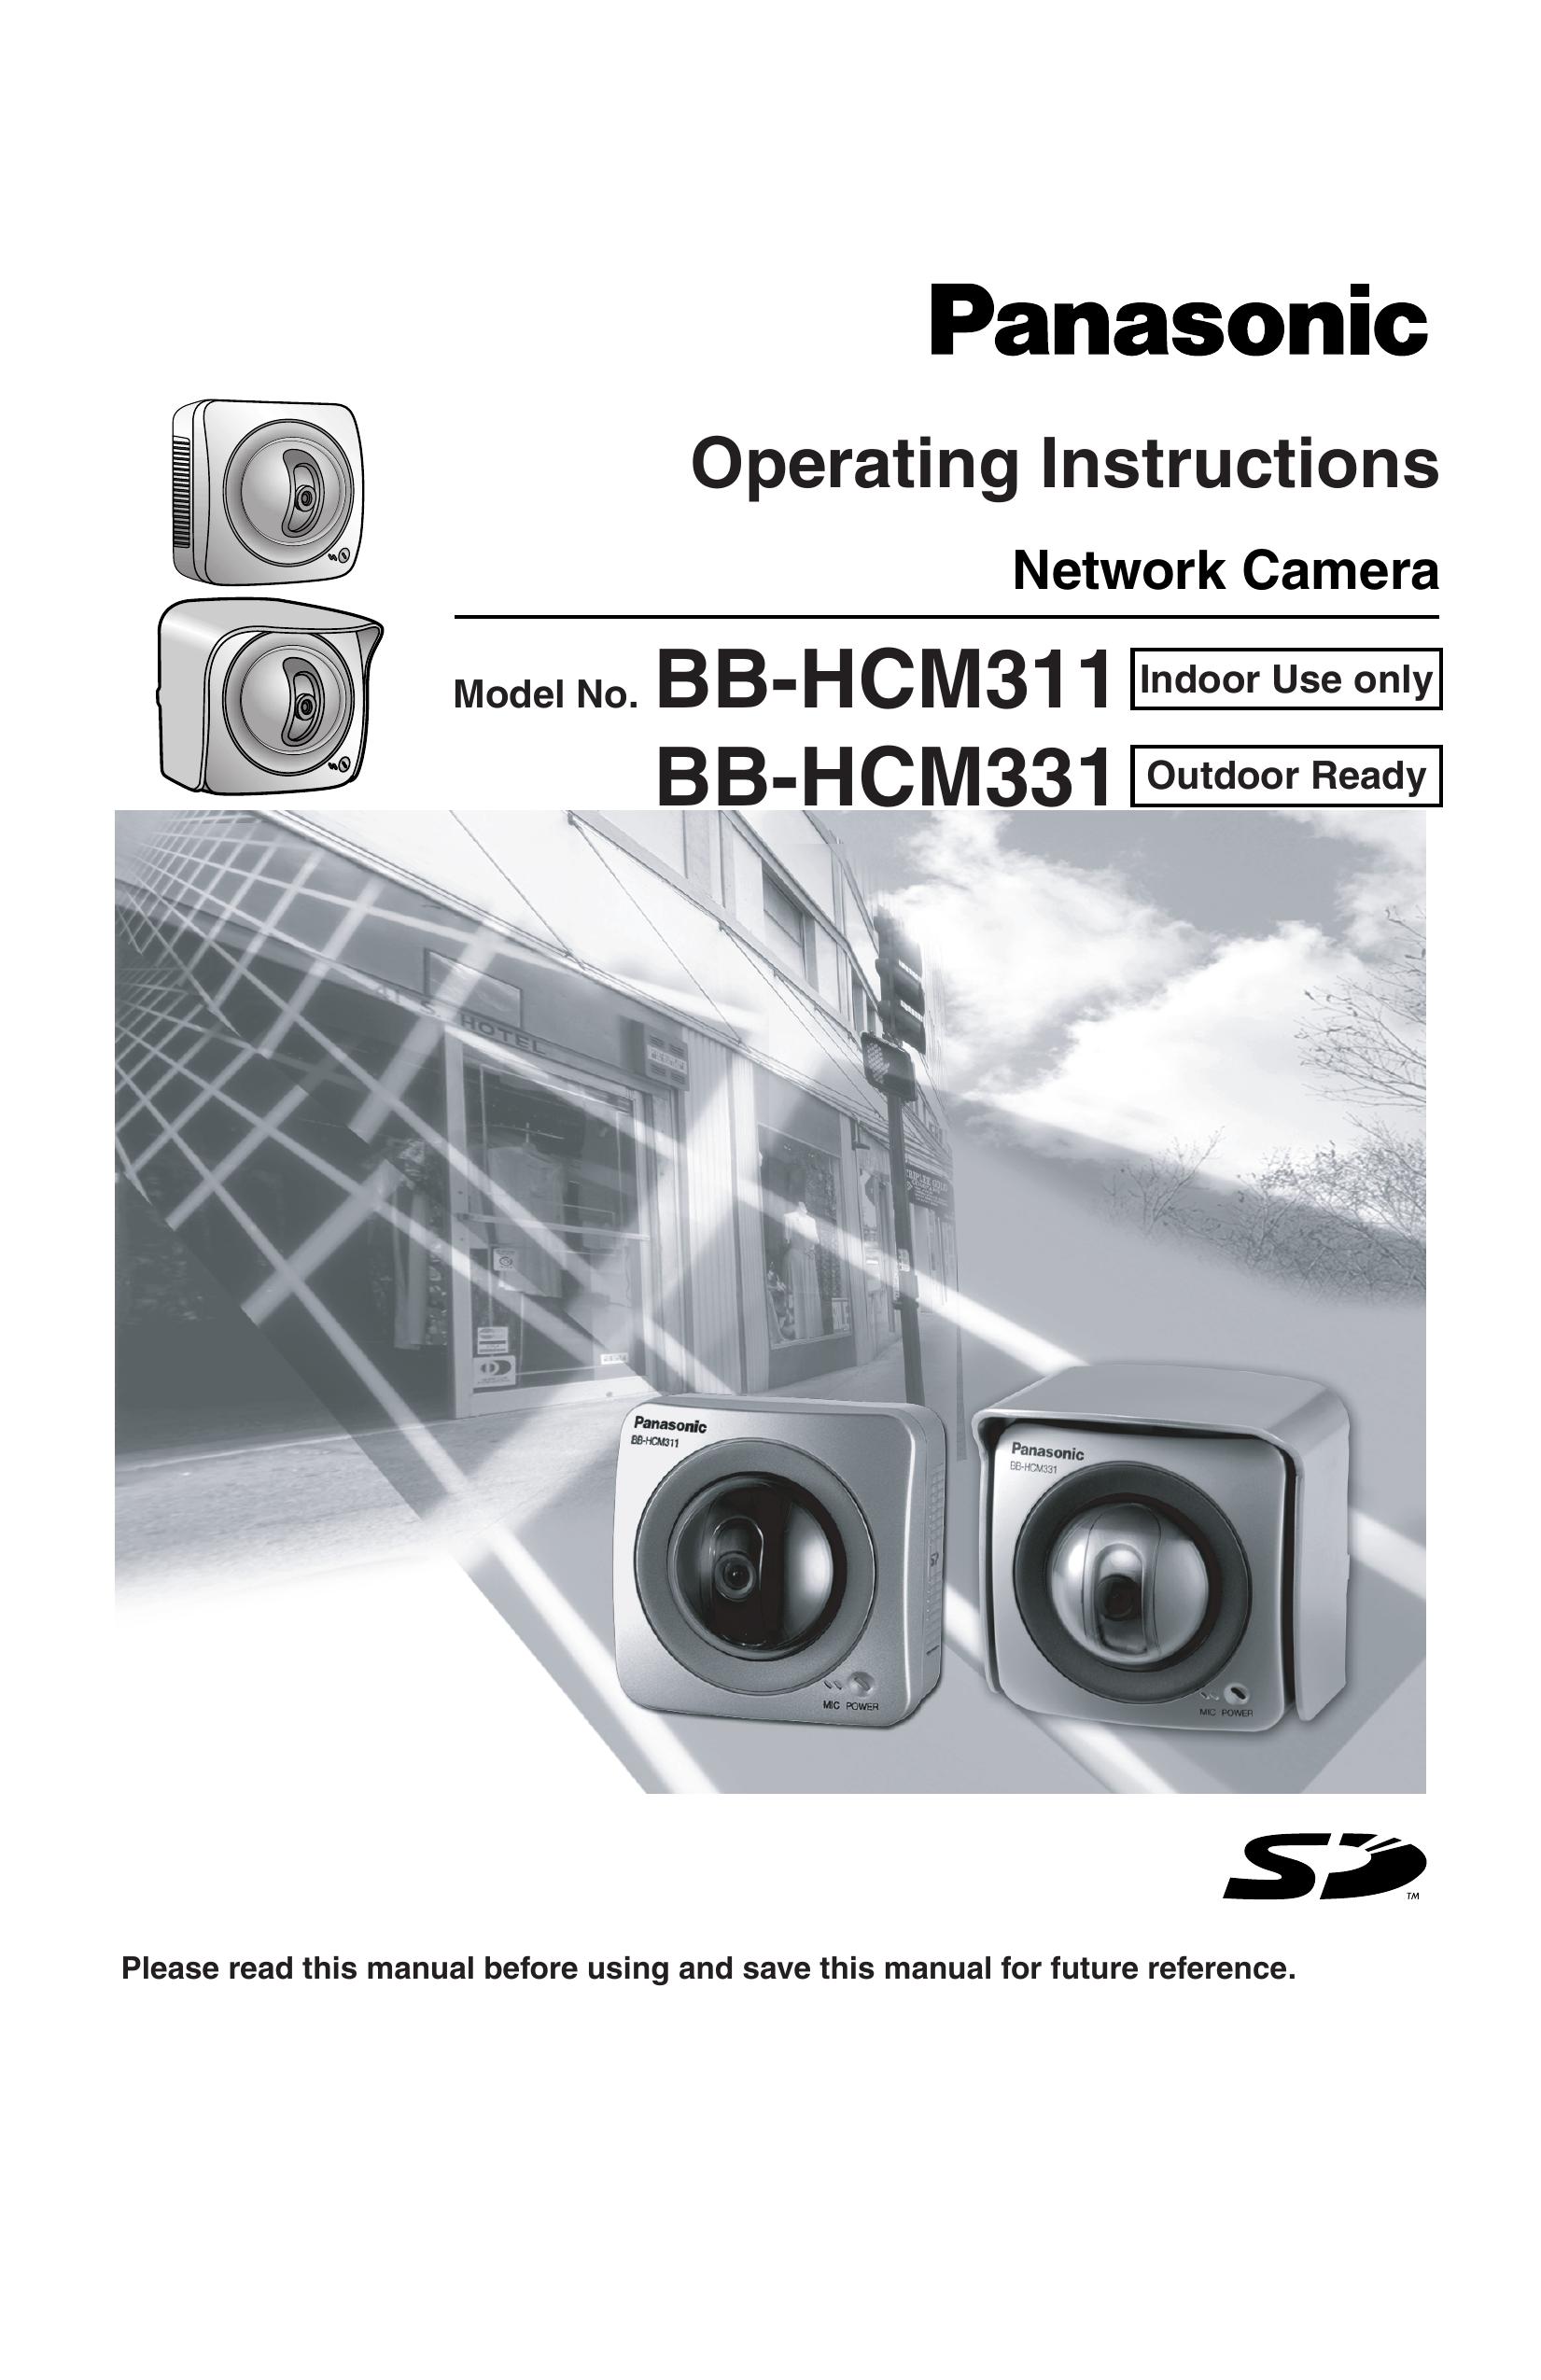 Panasonic BB-HCM331 Digital Camera User Manual